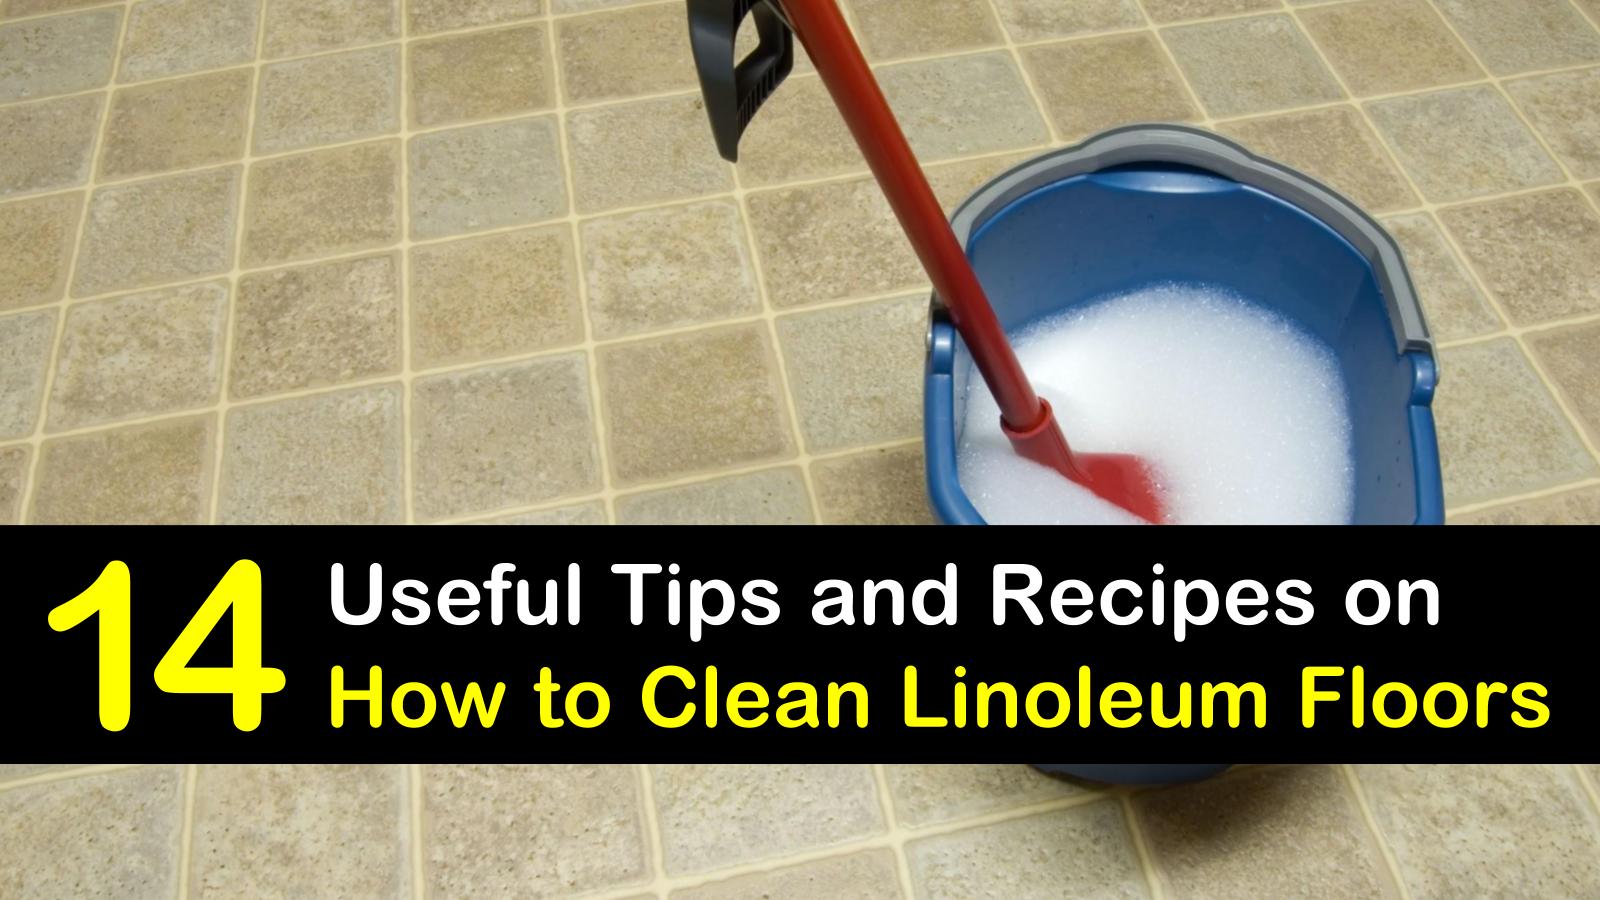 how to clean linoleum floors titleimg1